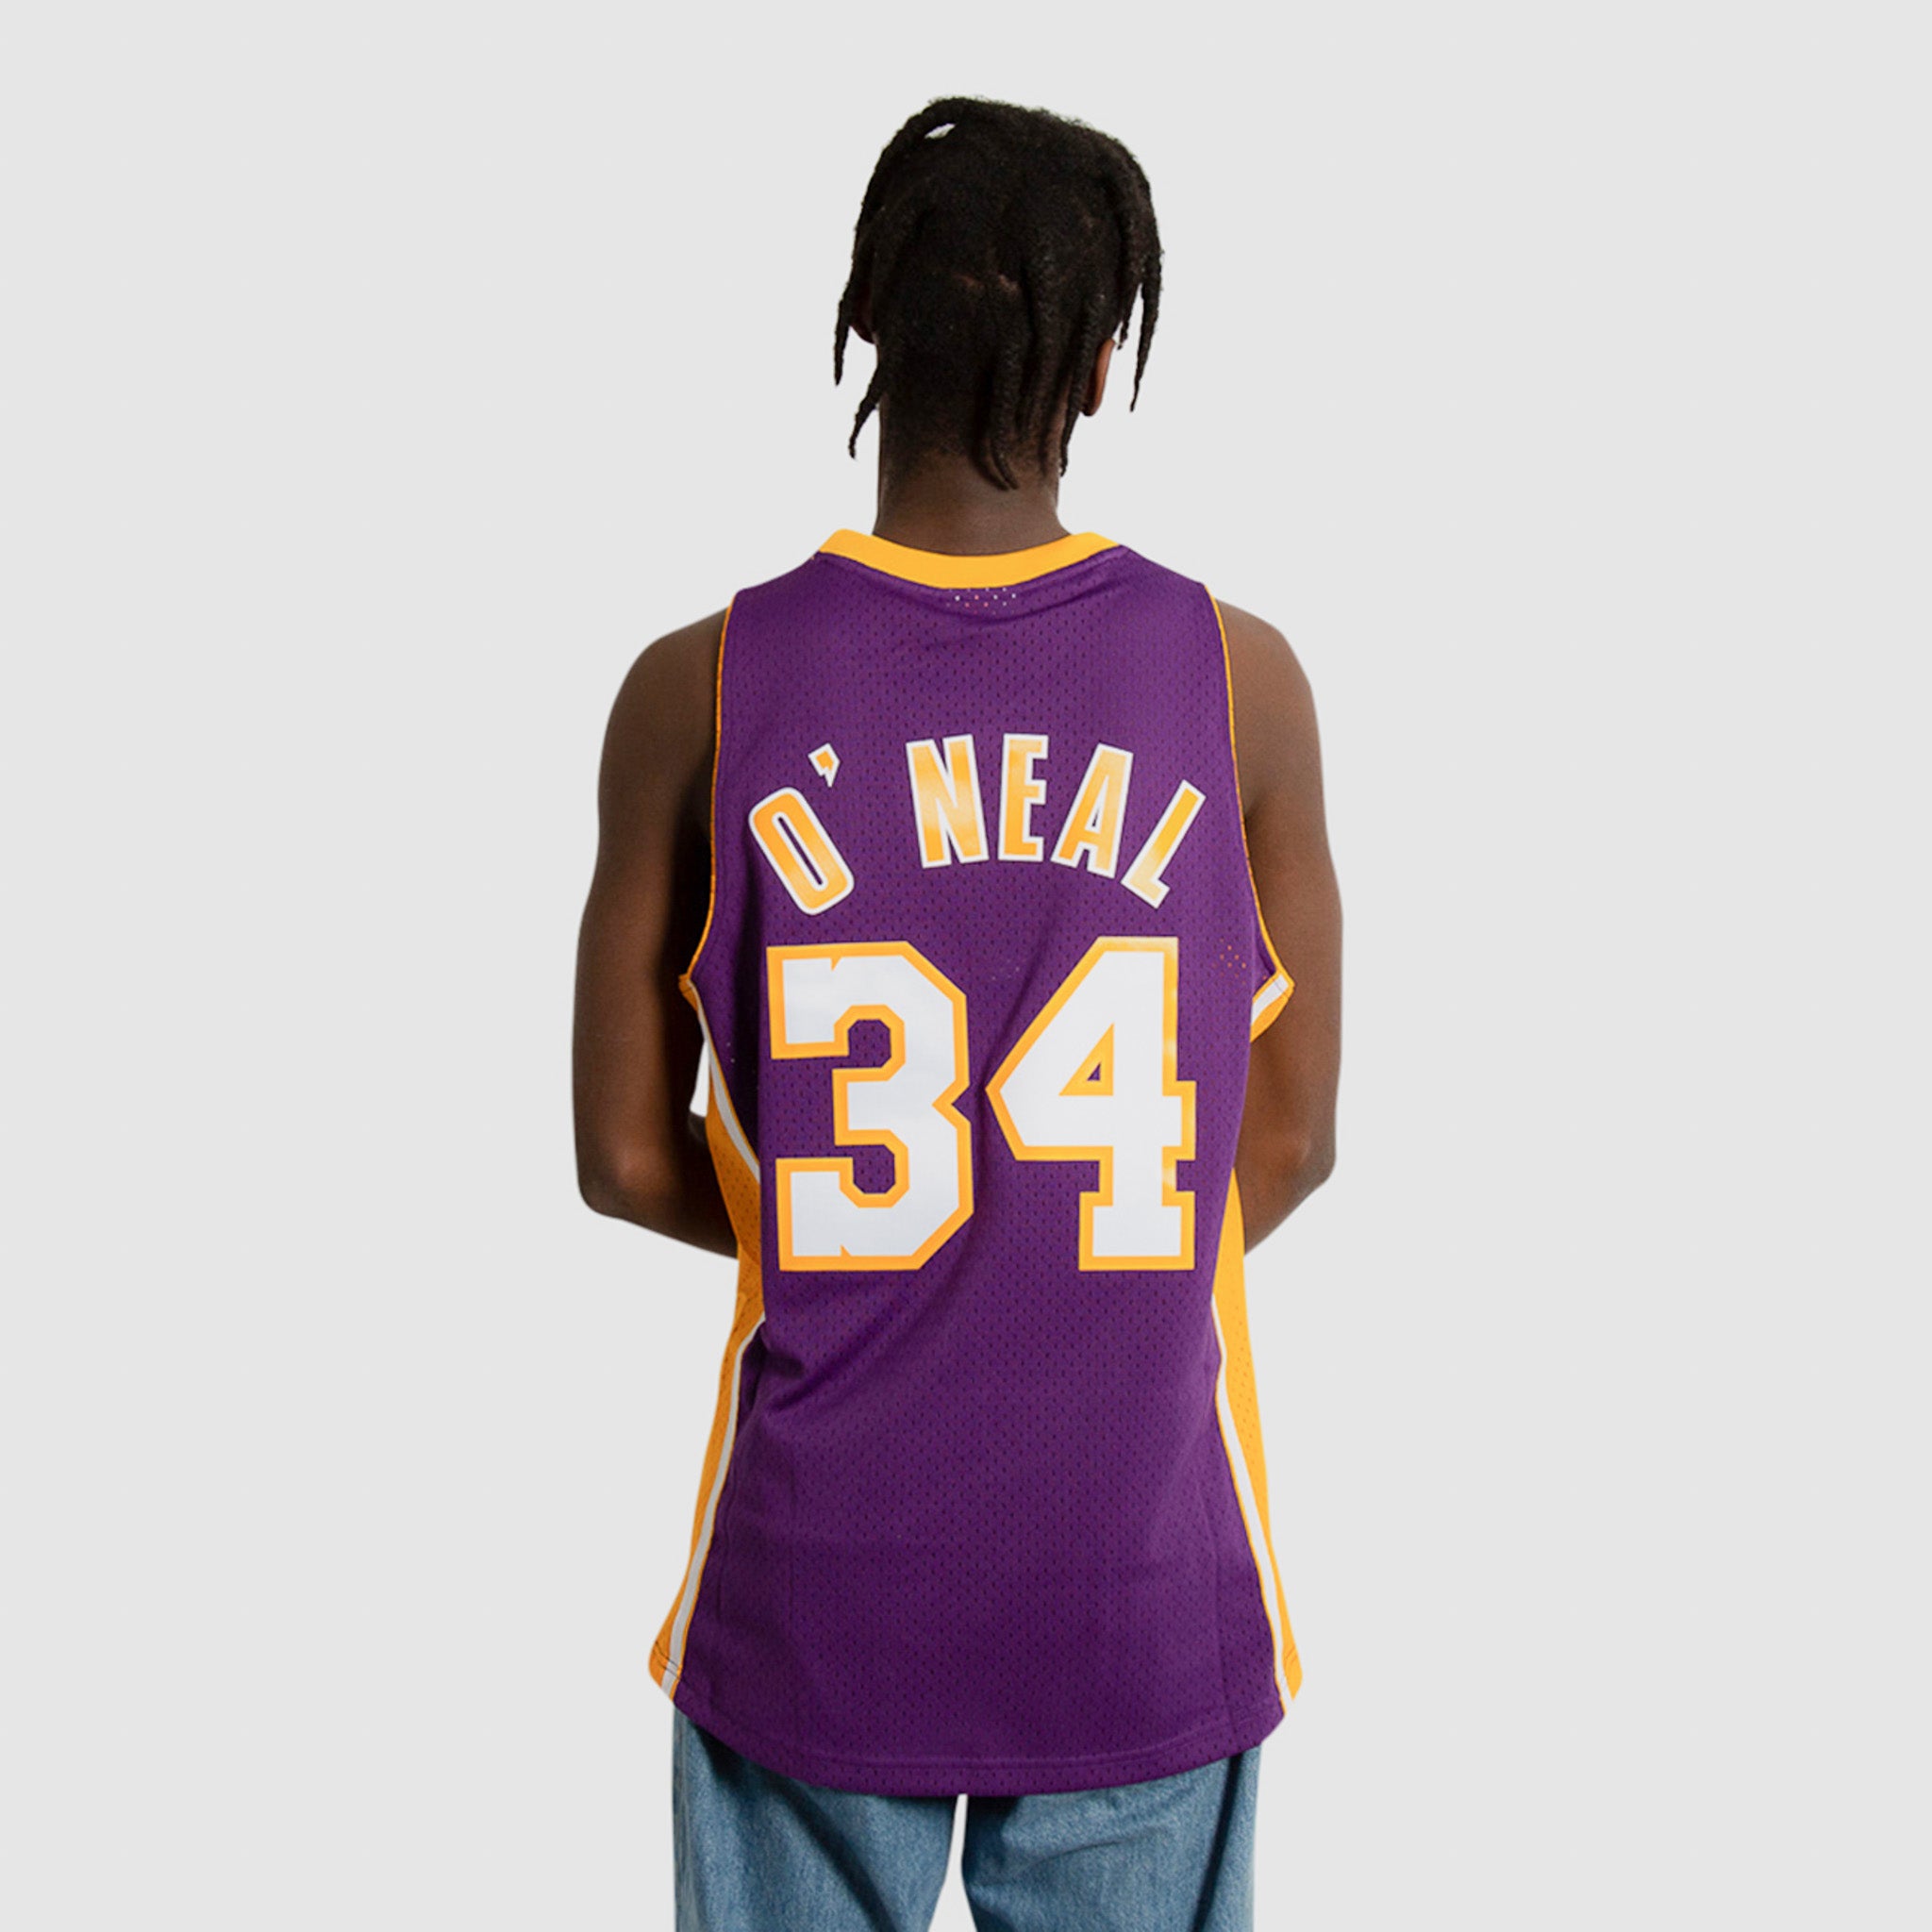 Shaquille O'Neal Los Angeles Lakers HWC Throwback NBA Swingman